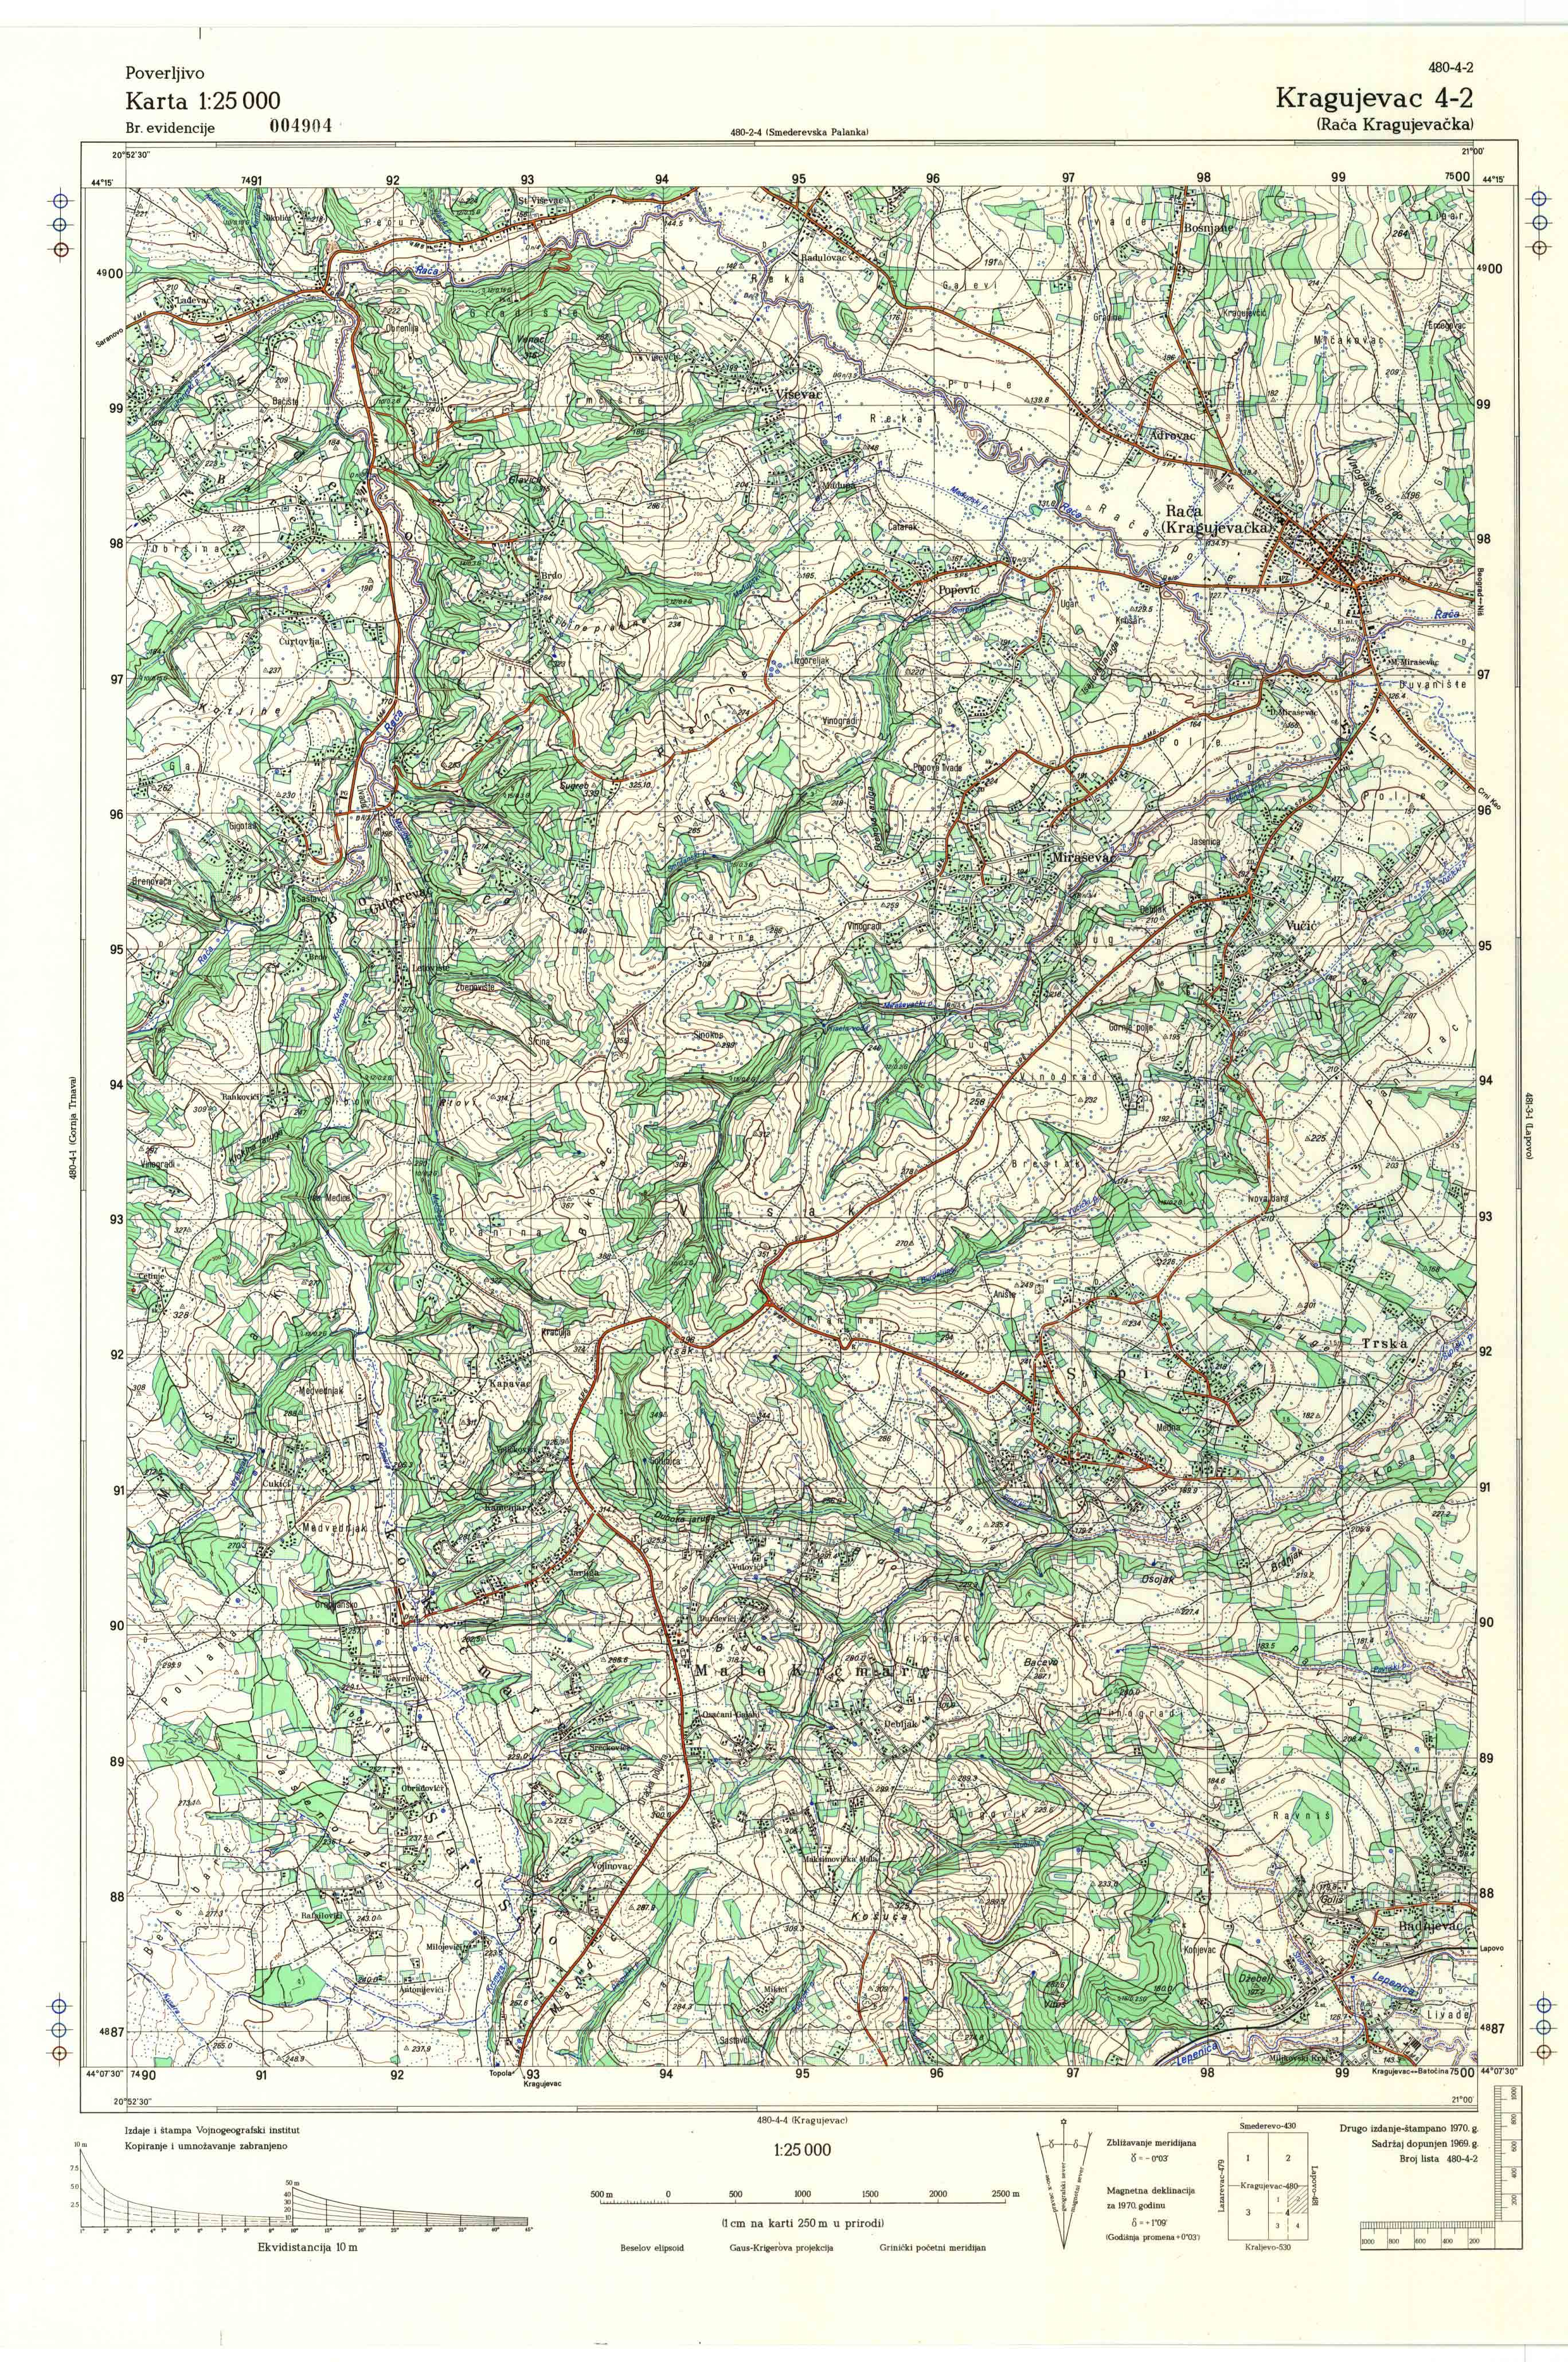  topografska karta srbije 25000 JNA  Kragujevac